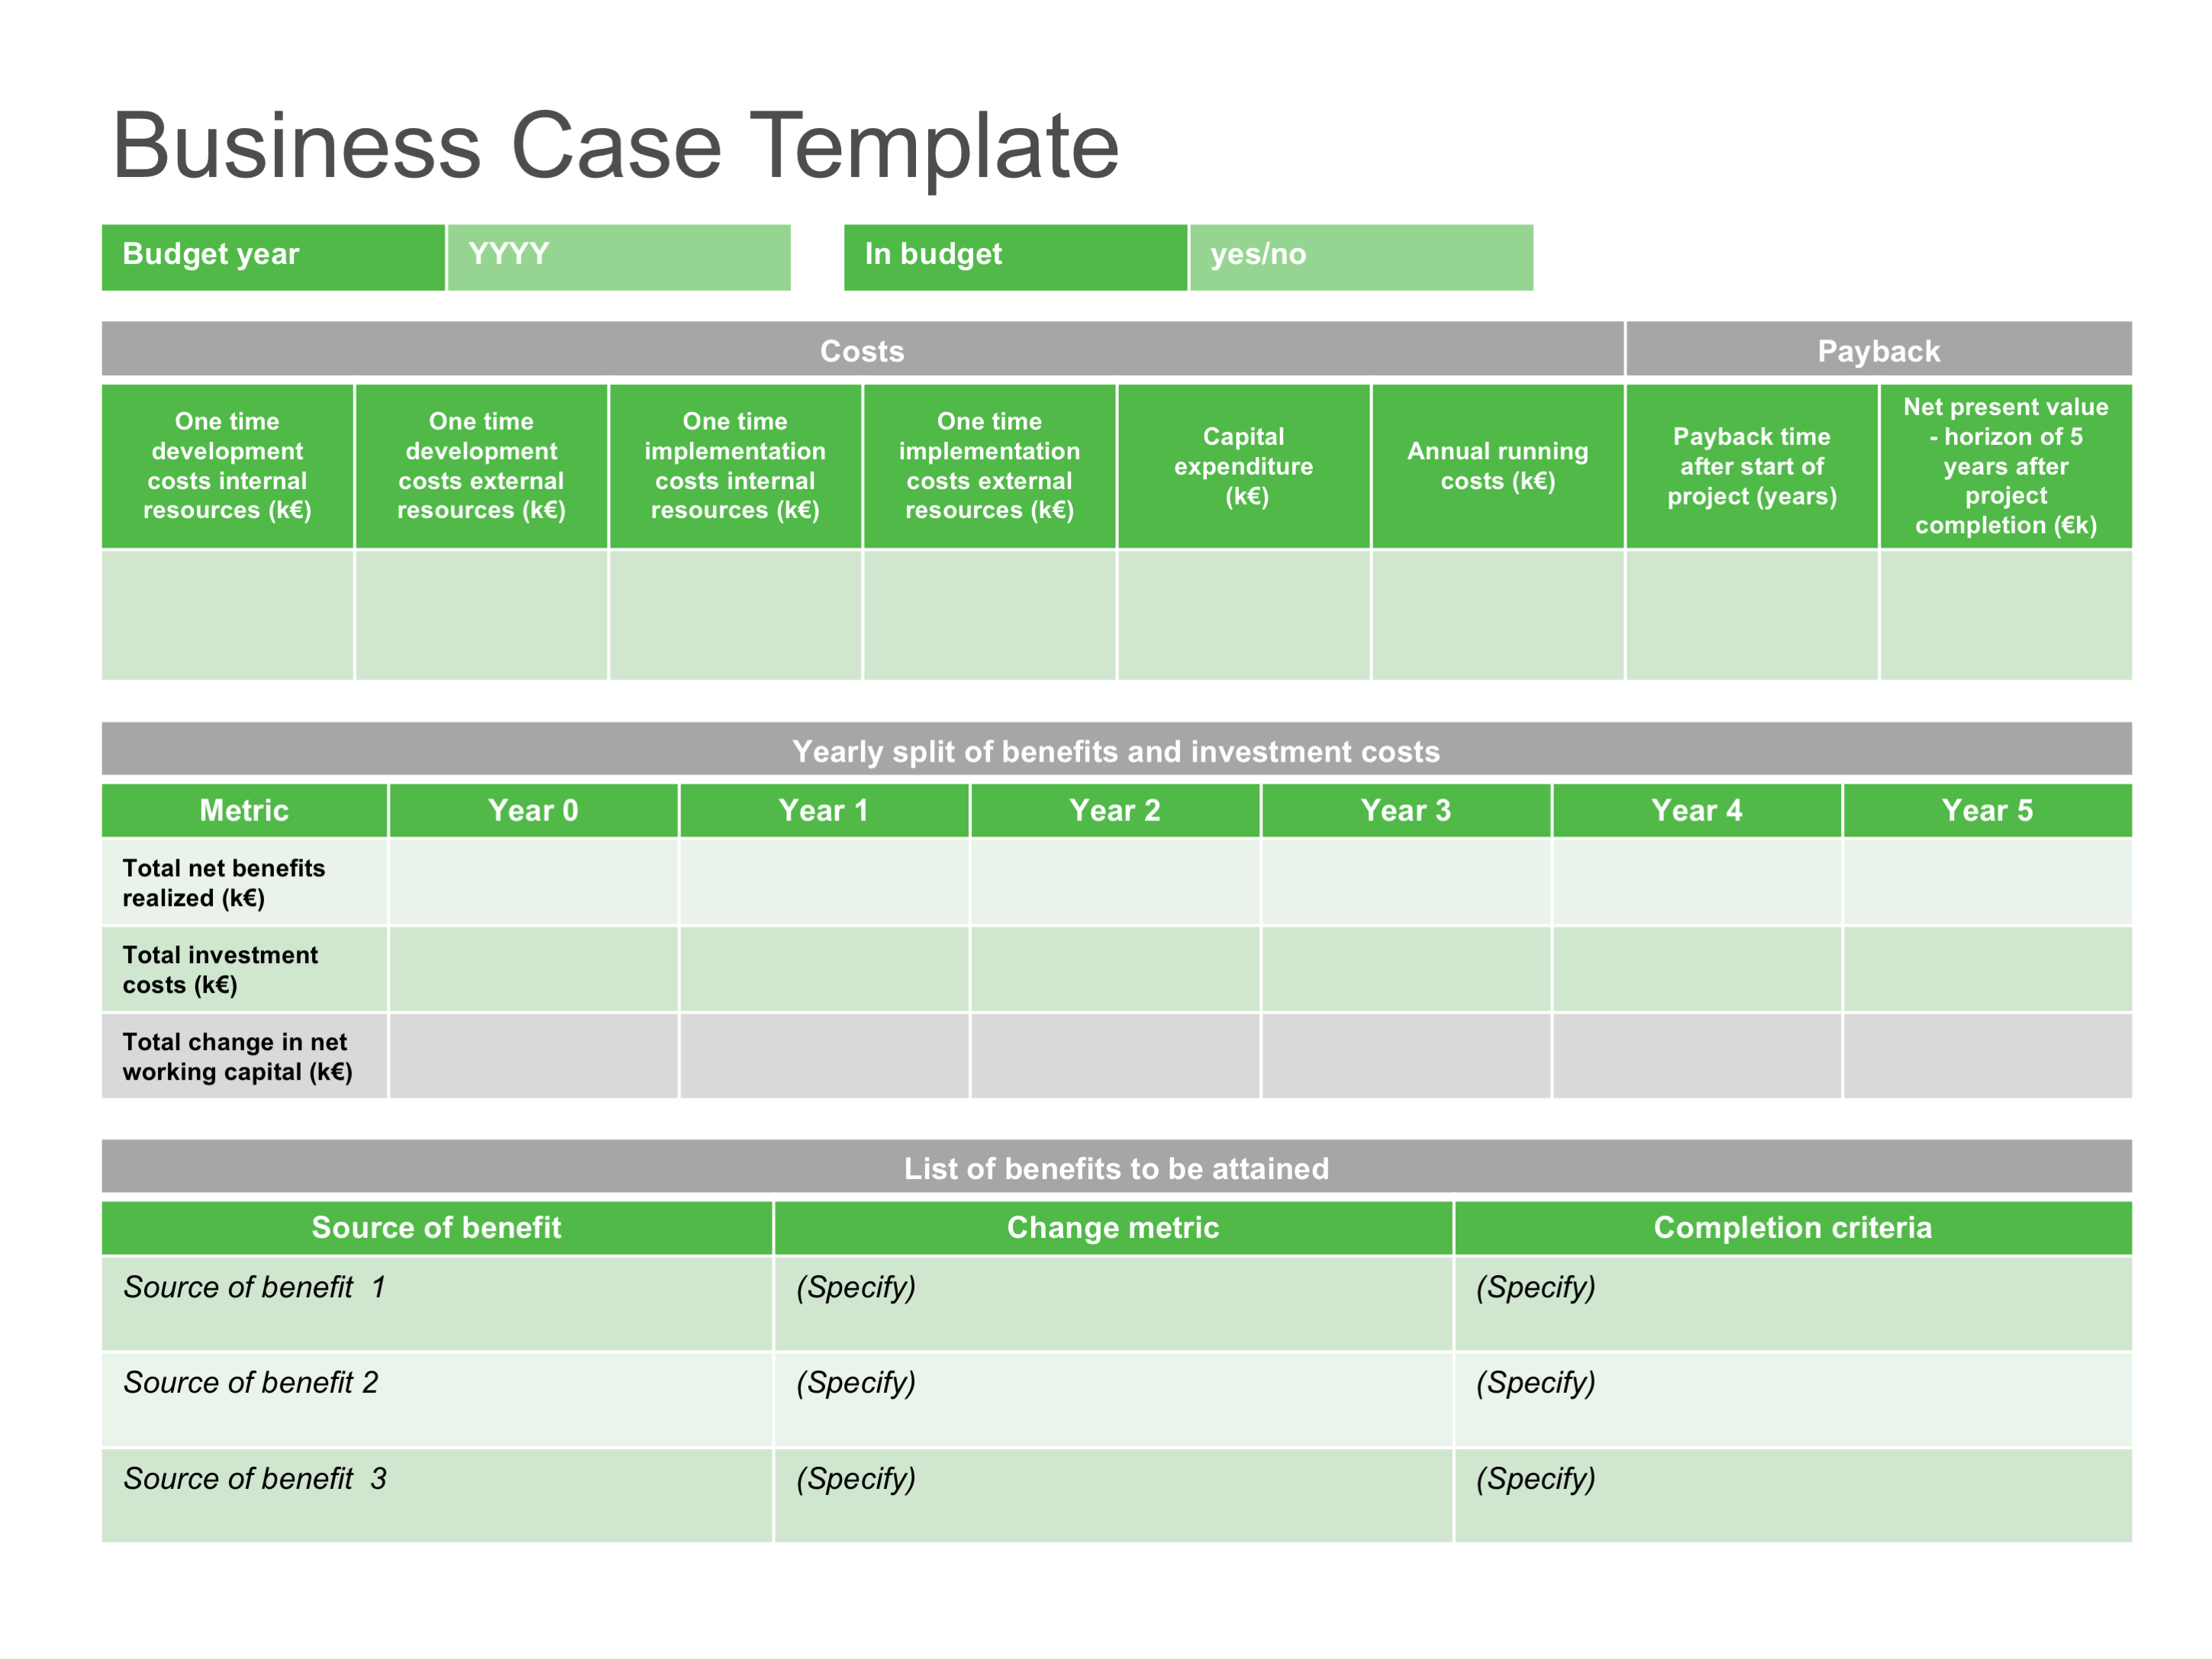 Example Business Case Template Filename – imzadi fragrances